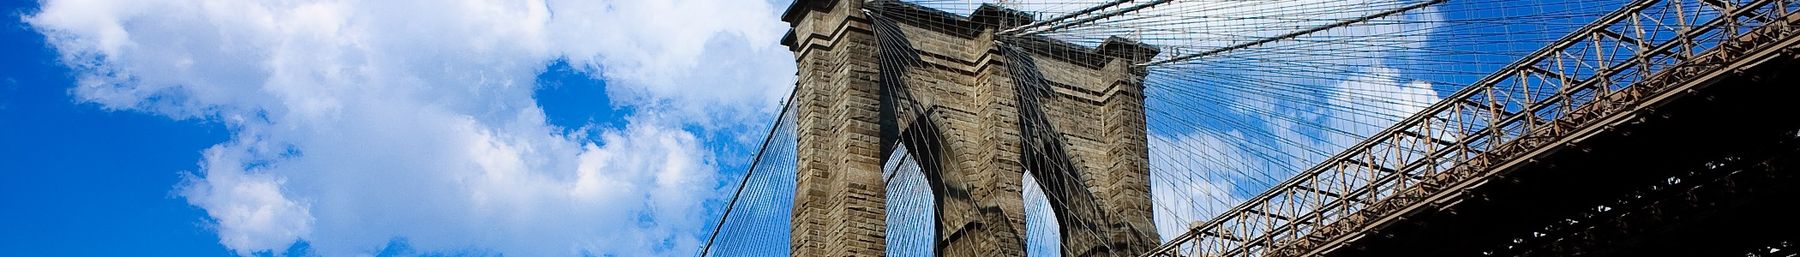 Brooklyn Bridge banner.jpg